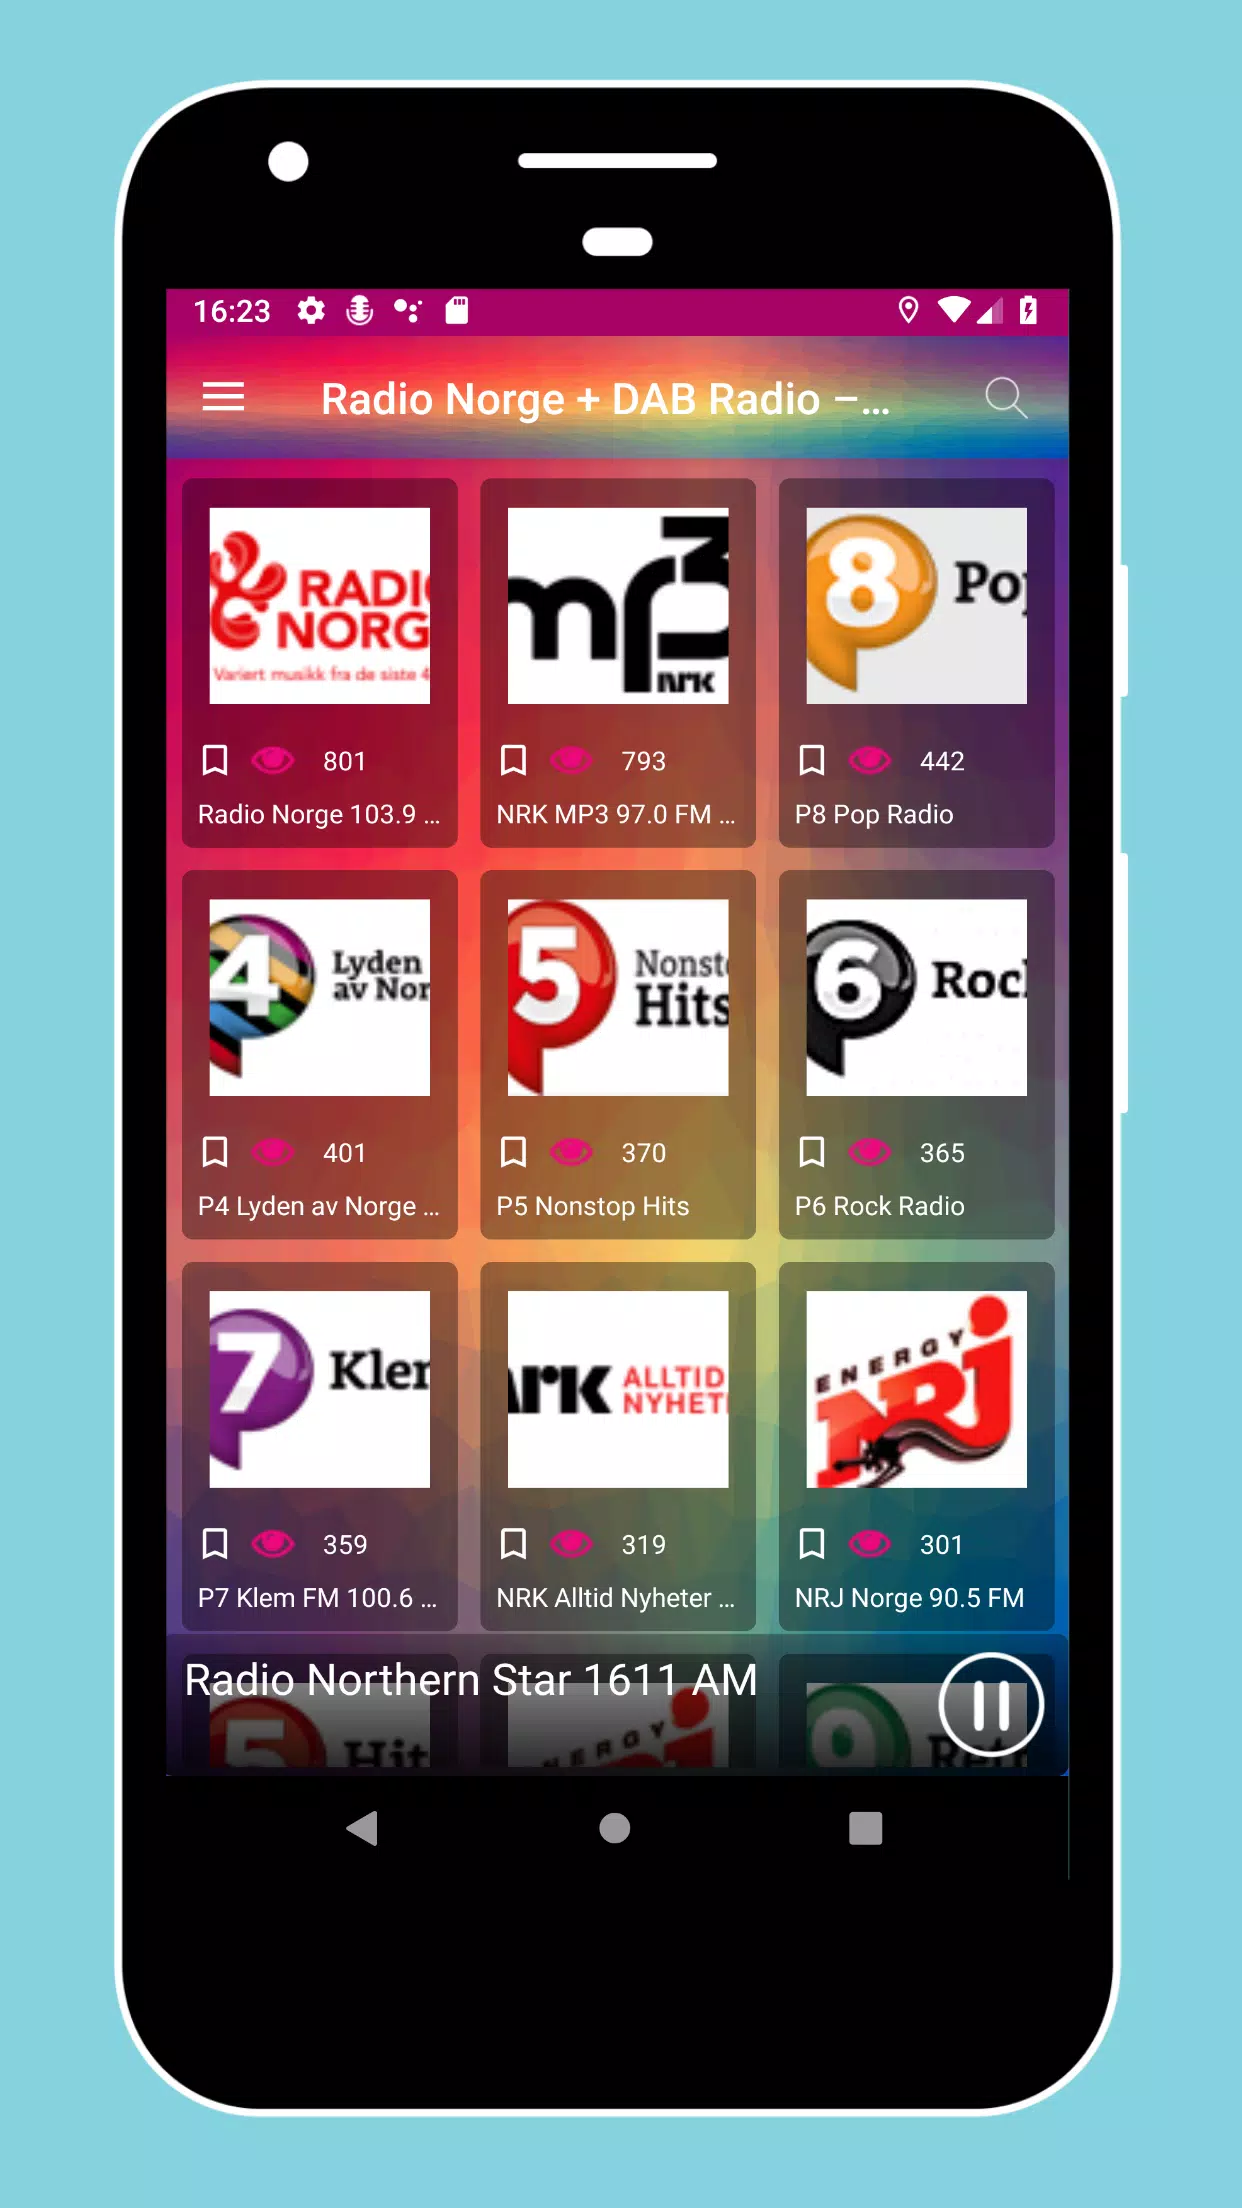 Radio Norway App + DAB Radio - Radio Norway Online APK for Android Download